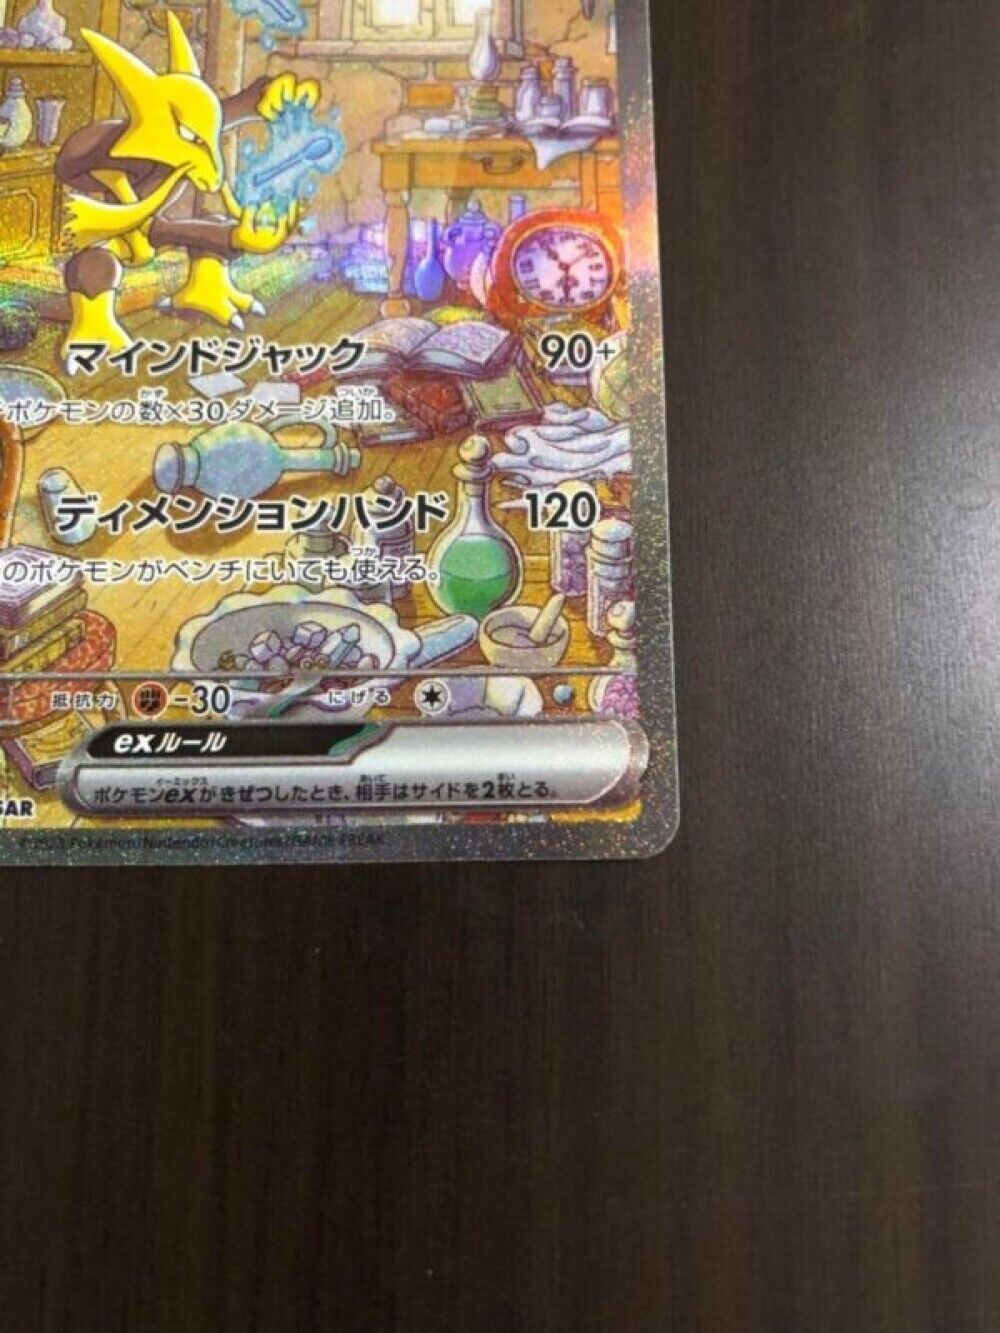 Pokémon 151 eng Alakazam EX SAR 201/165, Hobbies & Toys, Toys & Games on  Carousell